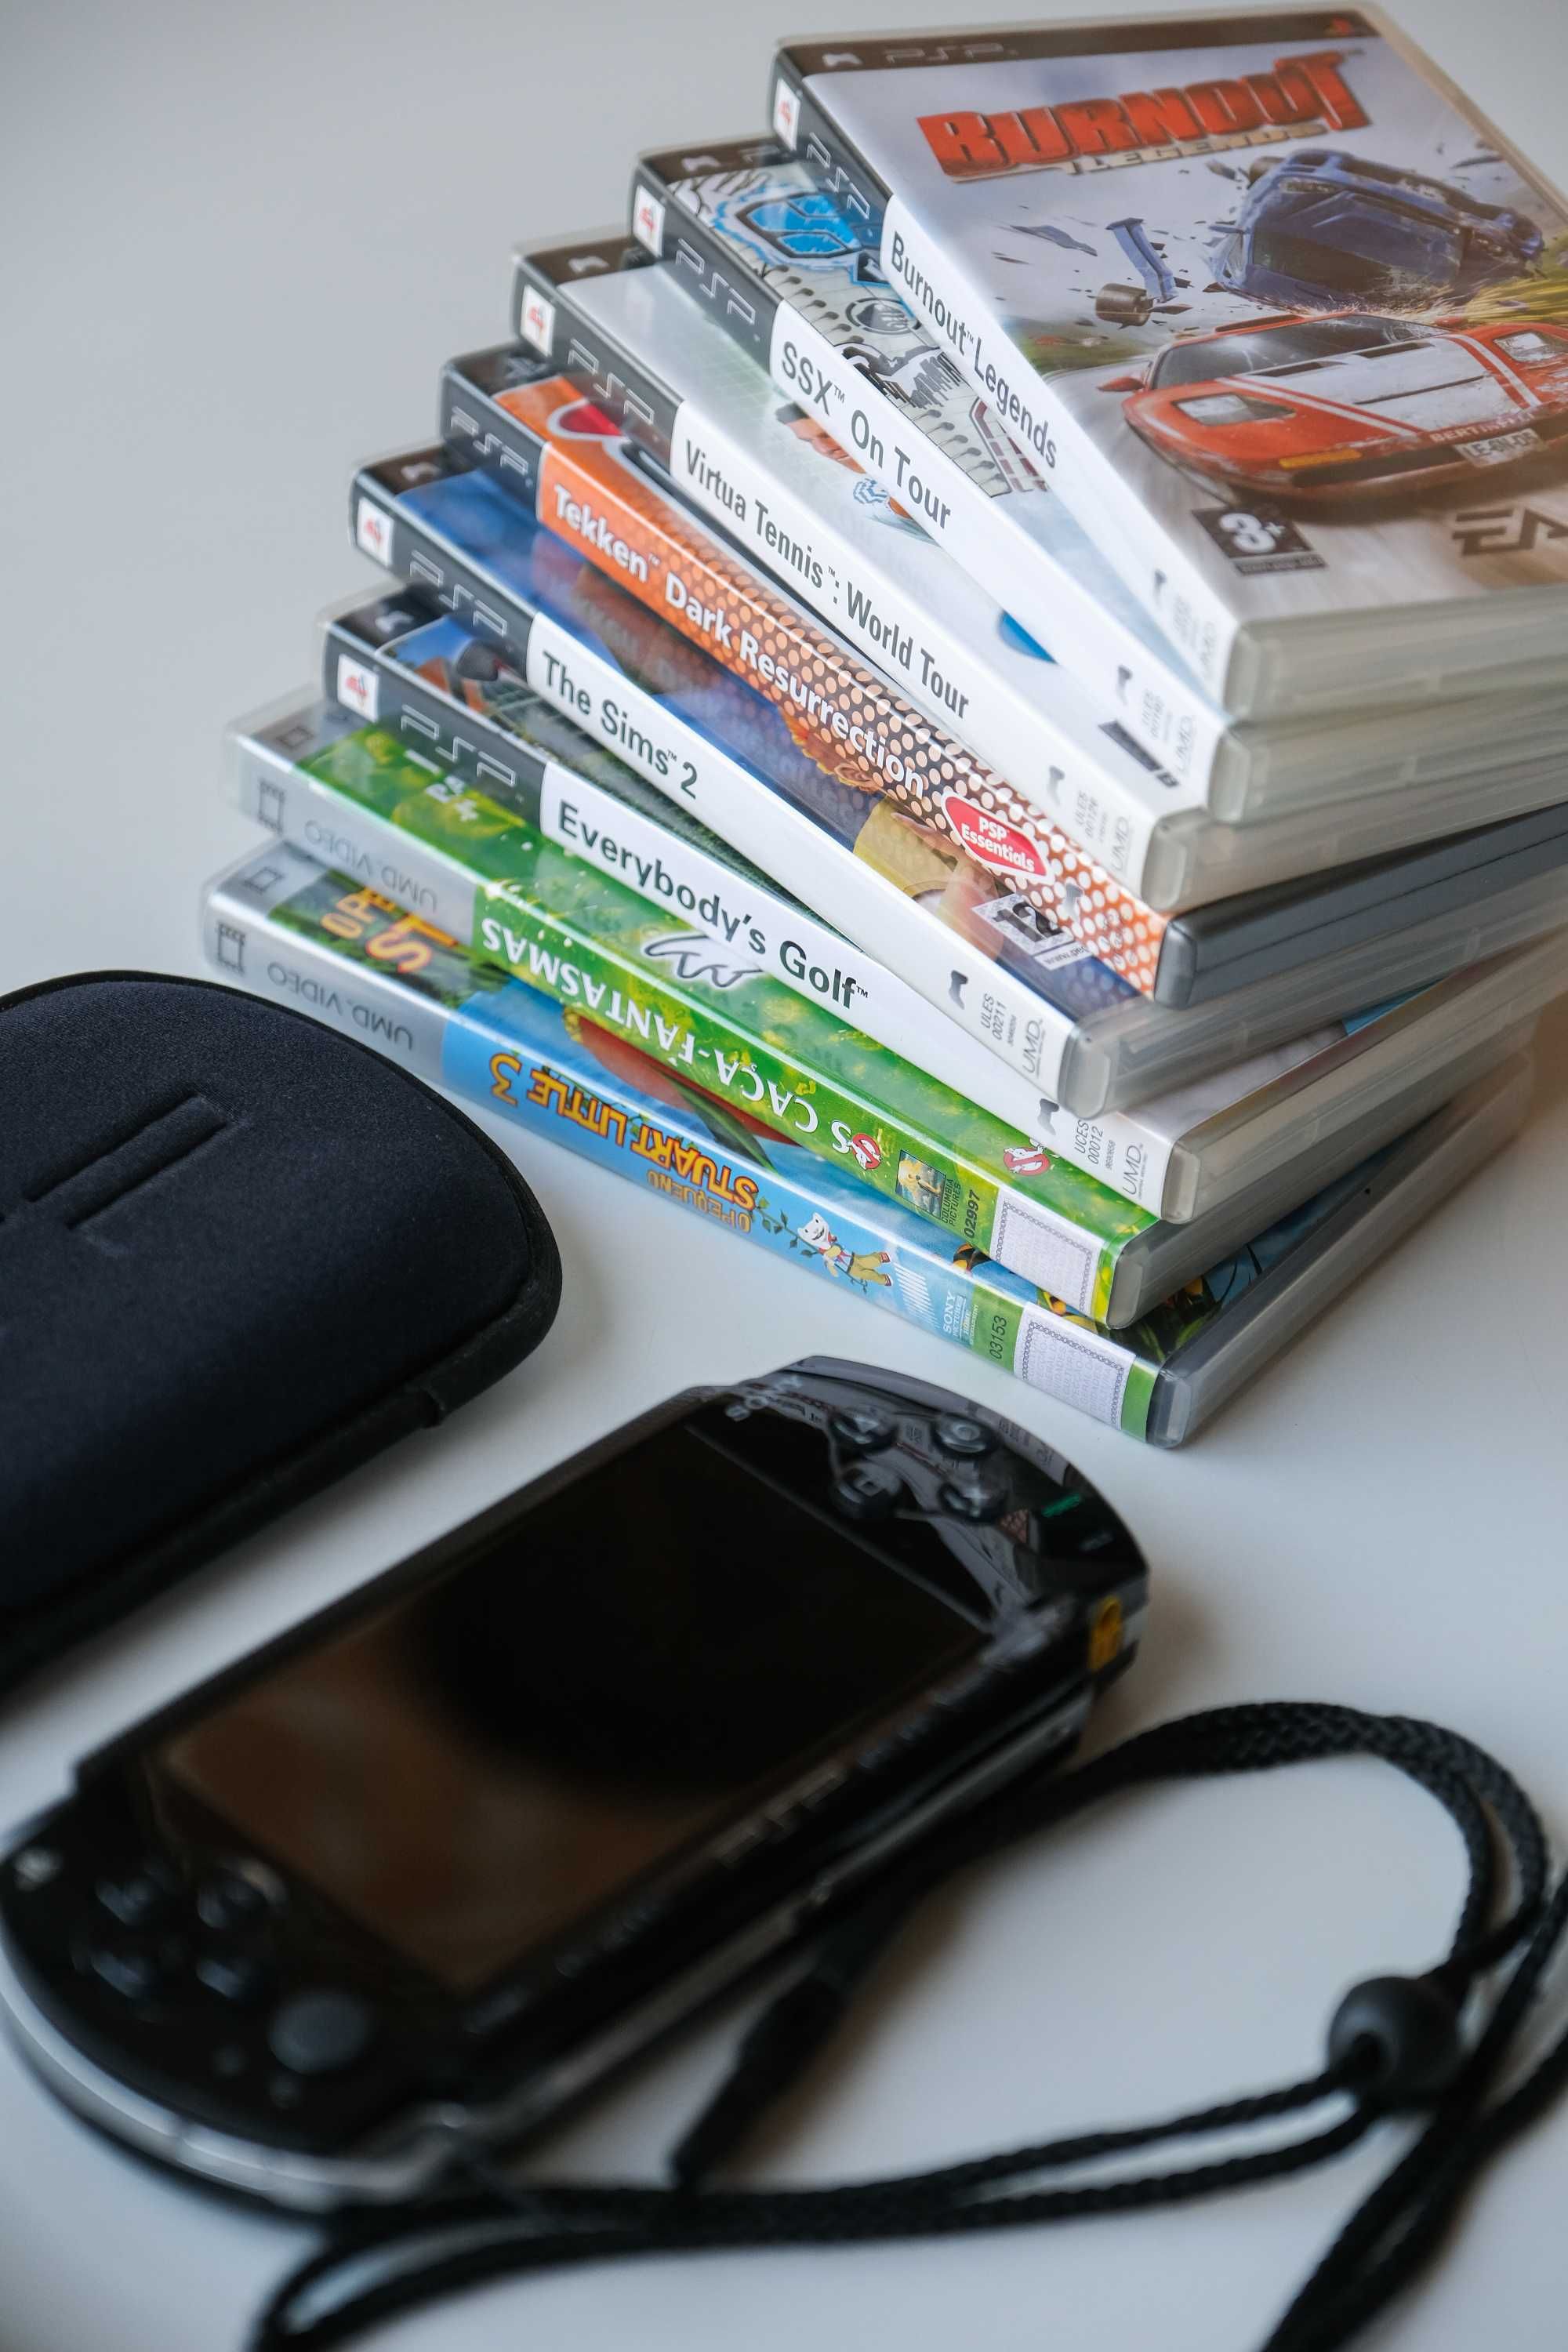 PSP - Playstation Portable